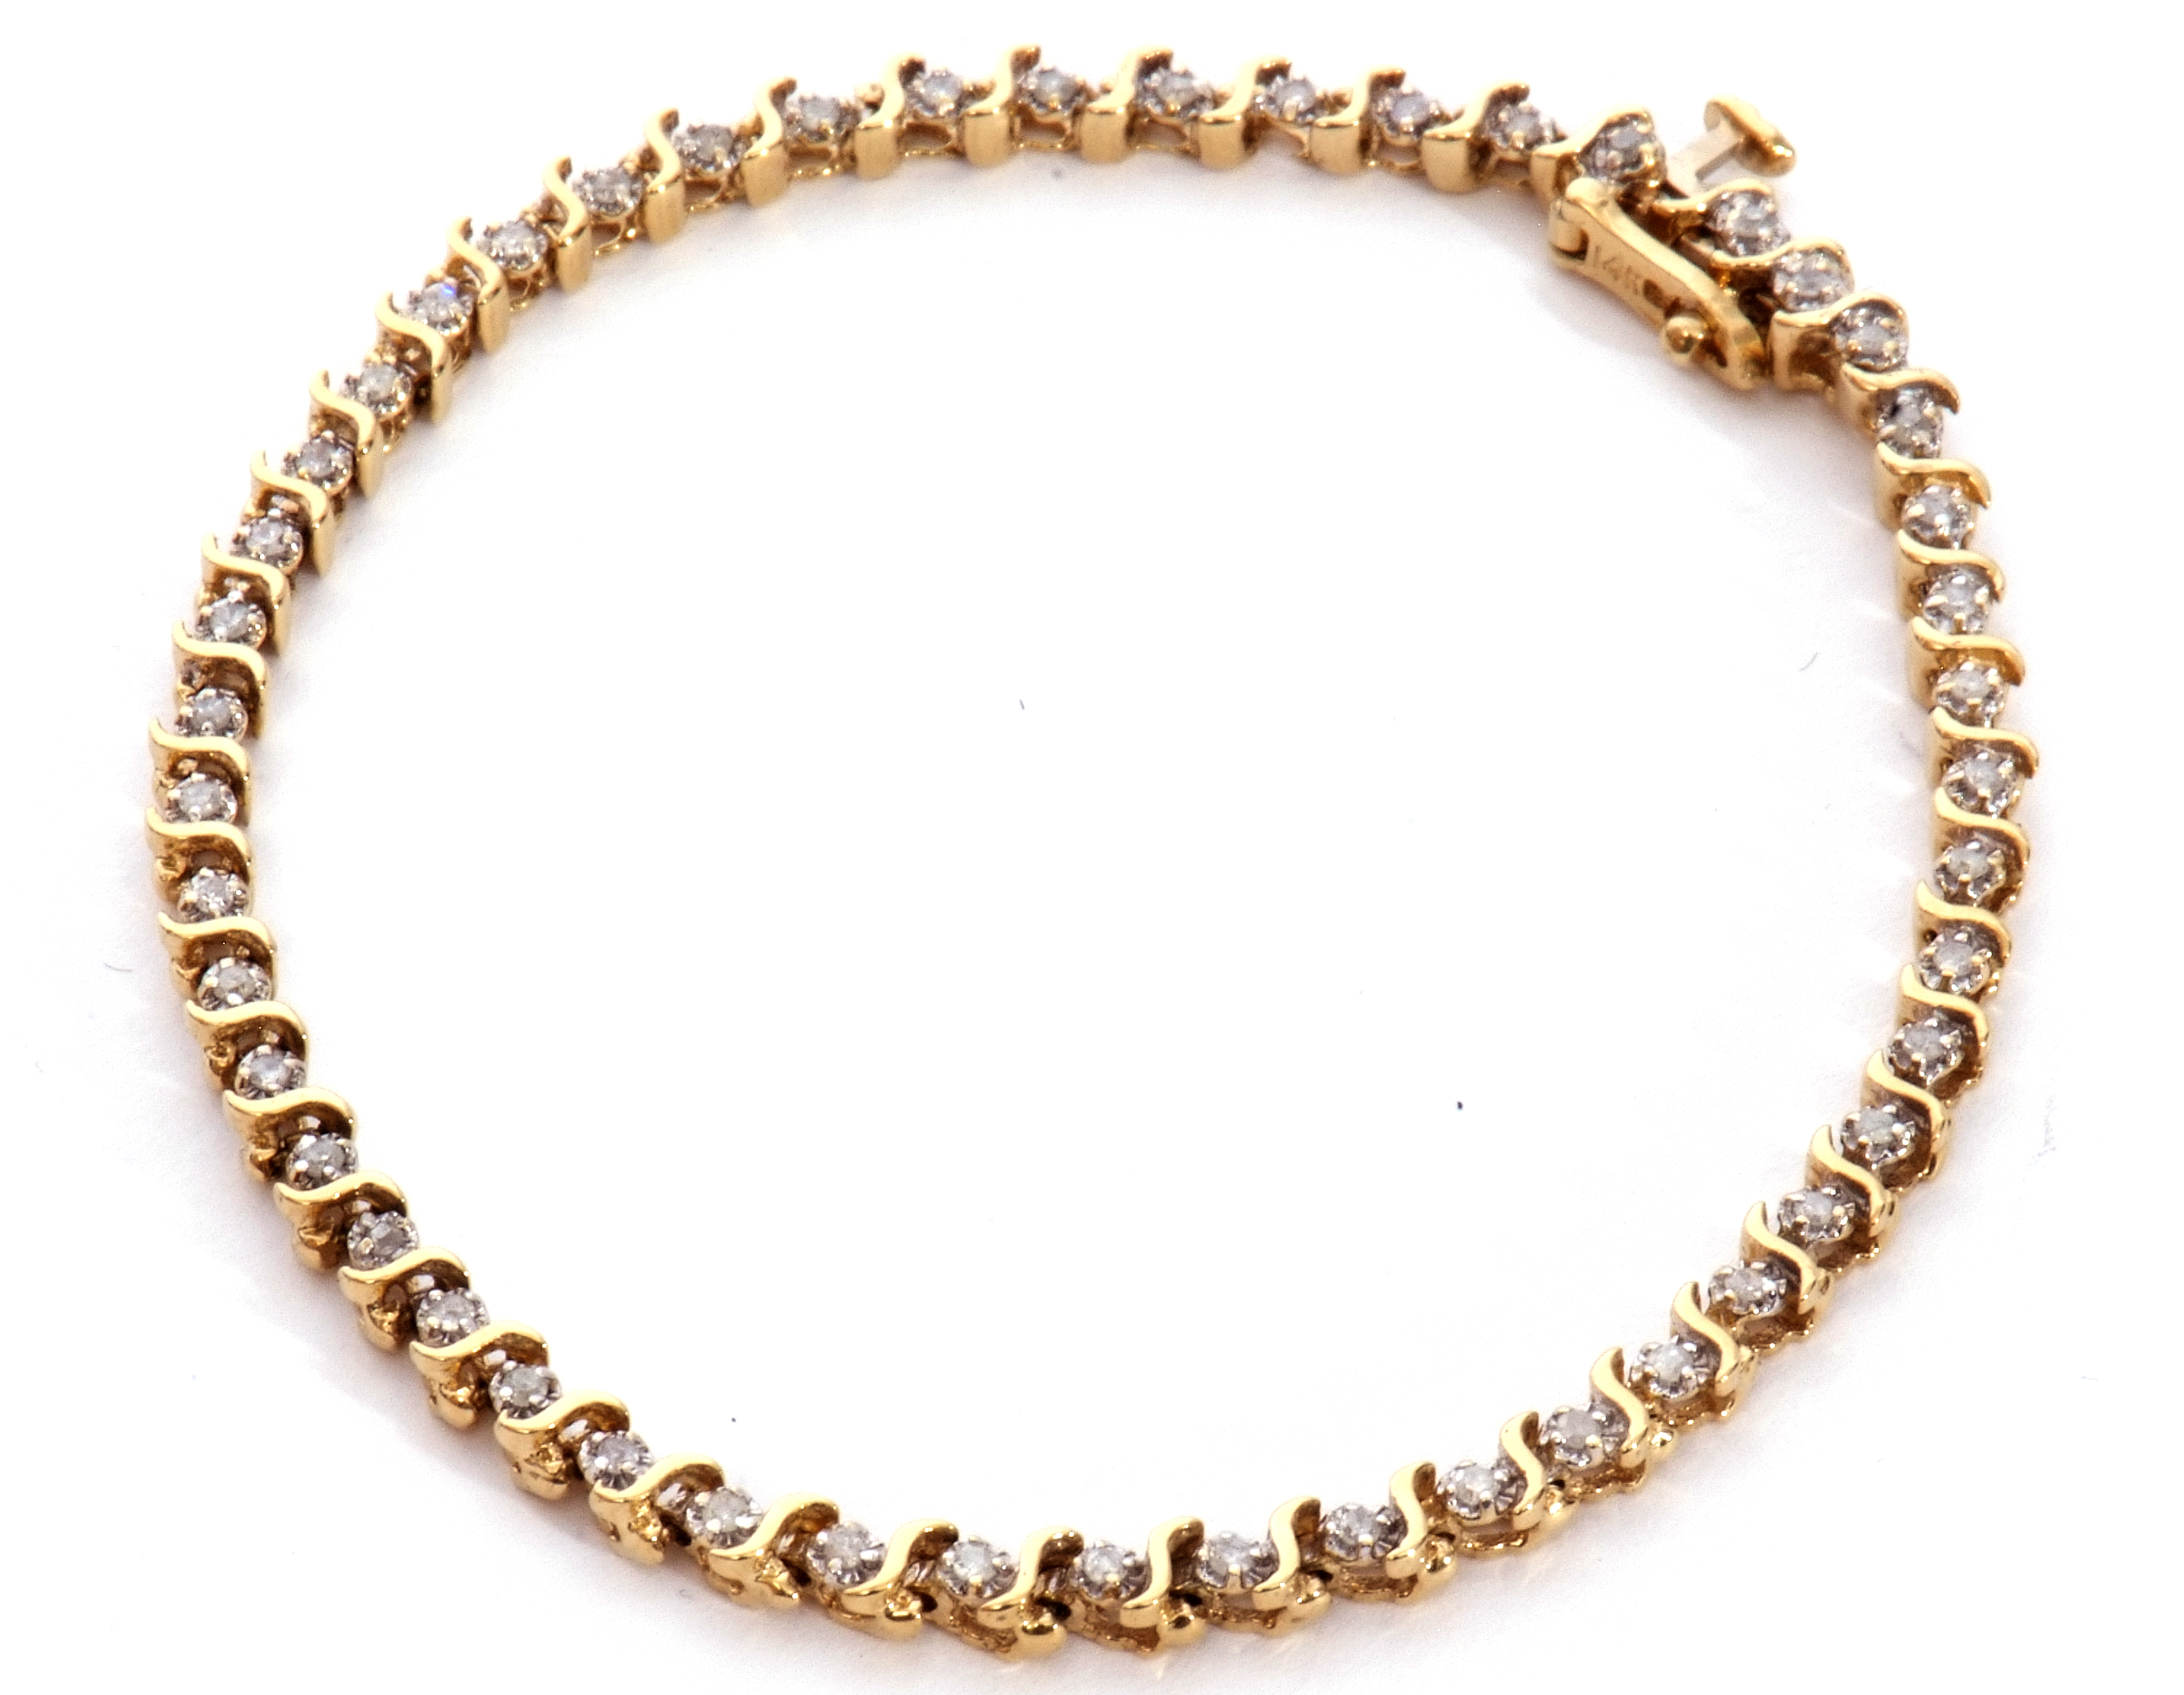 Diamond "tennis" bracelet featuring 49 small diamonds, individually claw set between S-links,